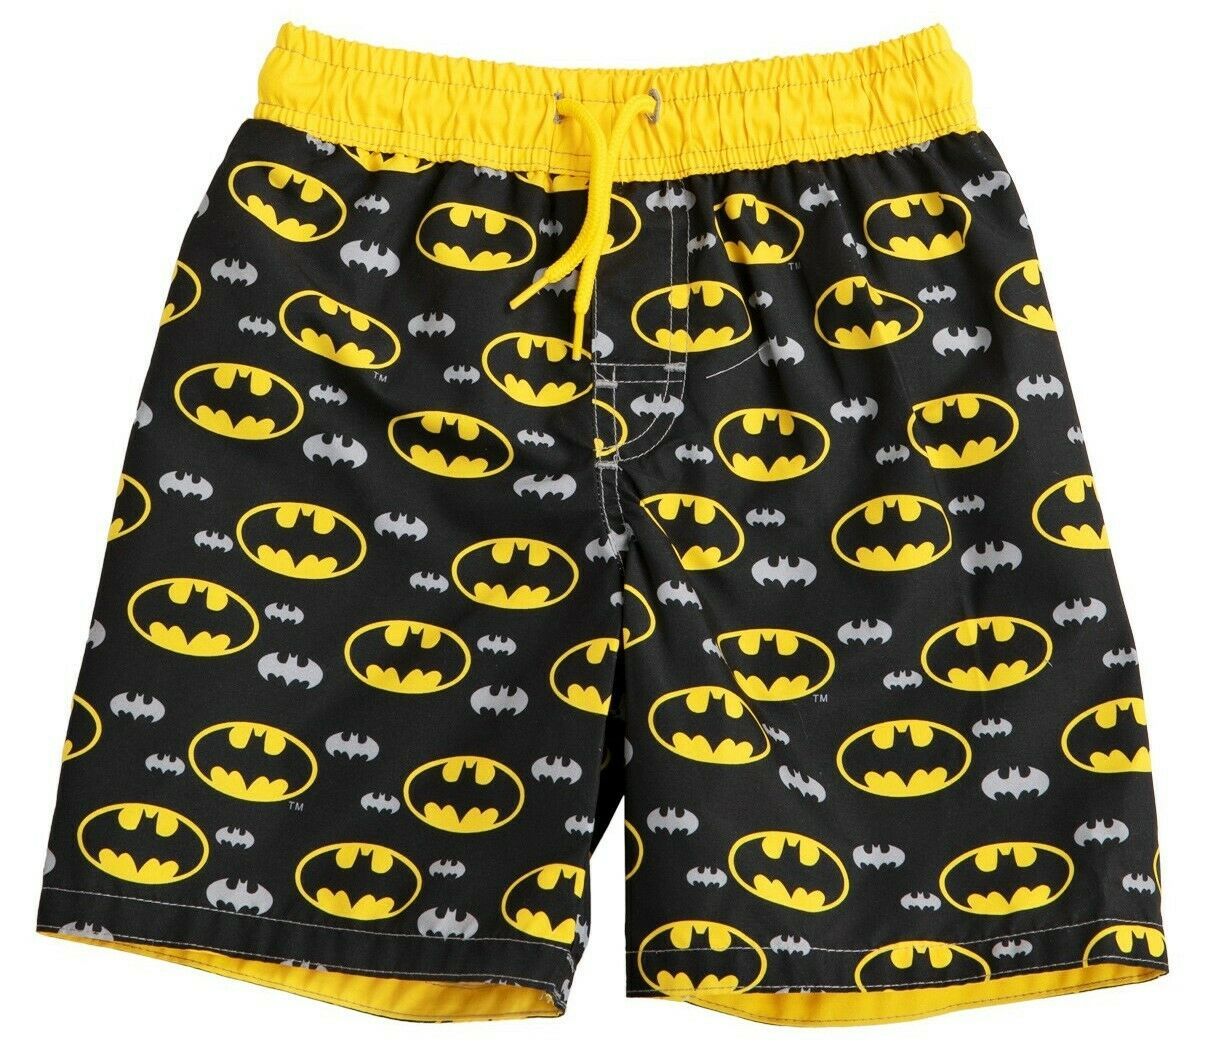 BATMAN DC COMICS UPF-50+ Bathing Suit Swim Trunks NWT Boys Sizes 4, 5-6 or 7 $25 - $14.99